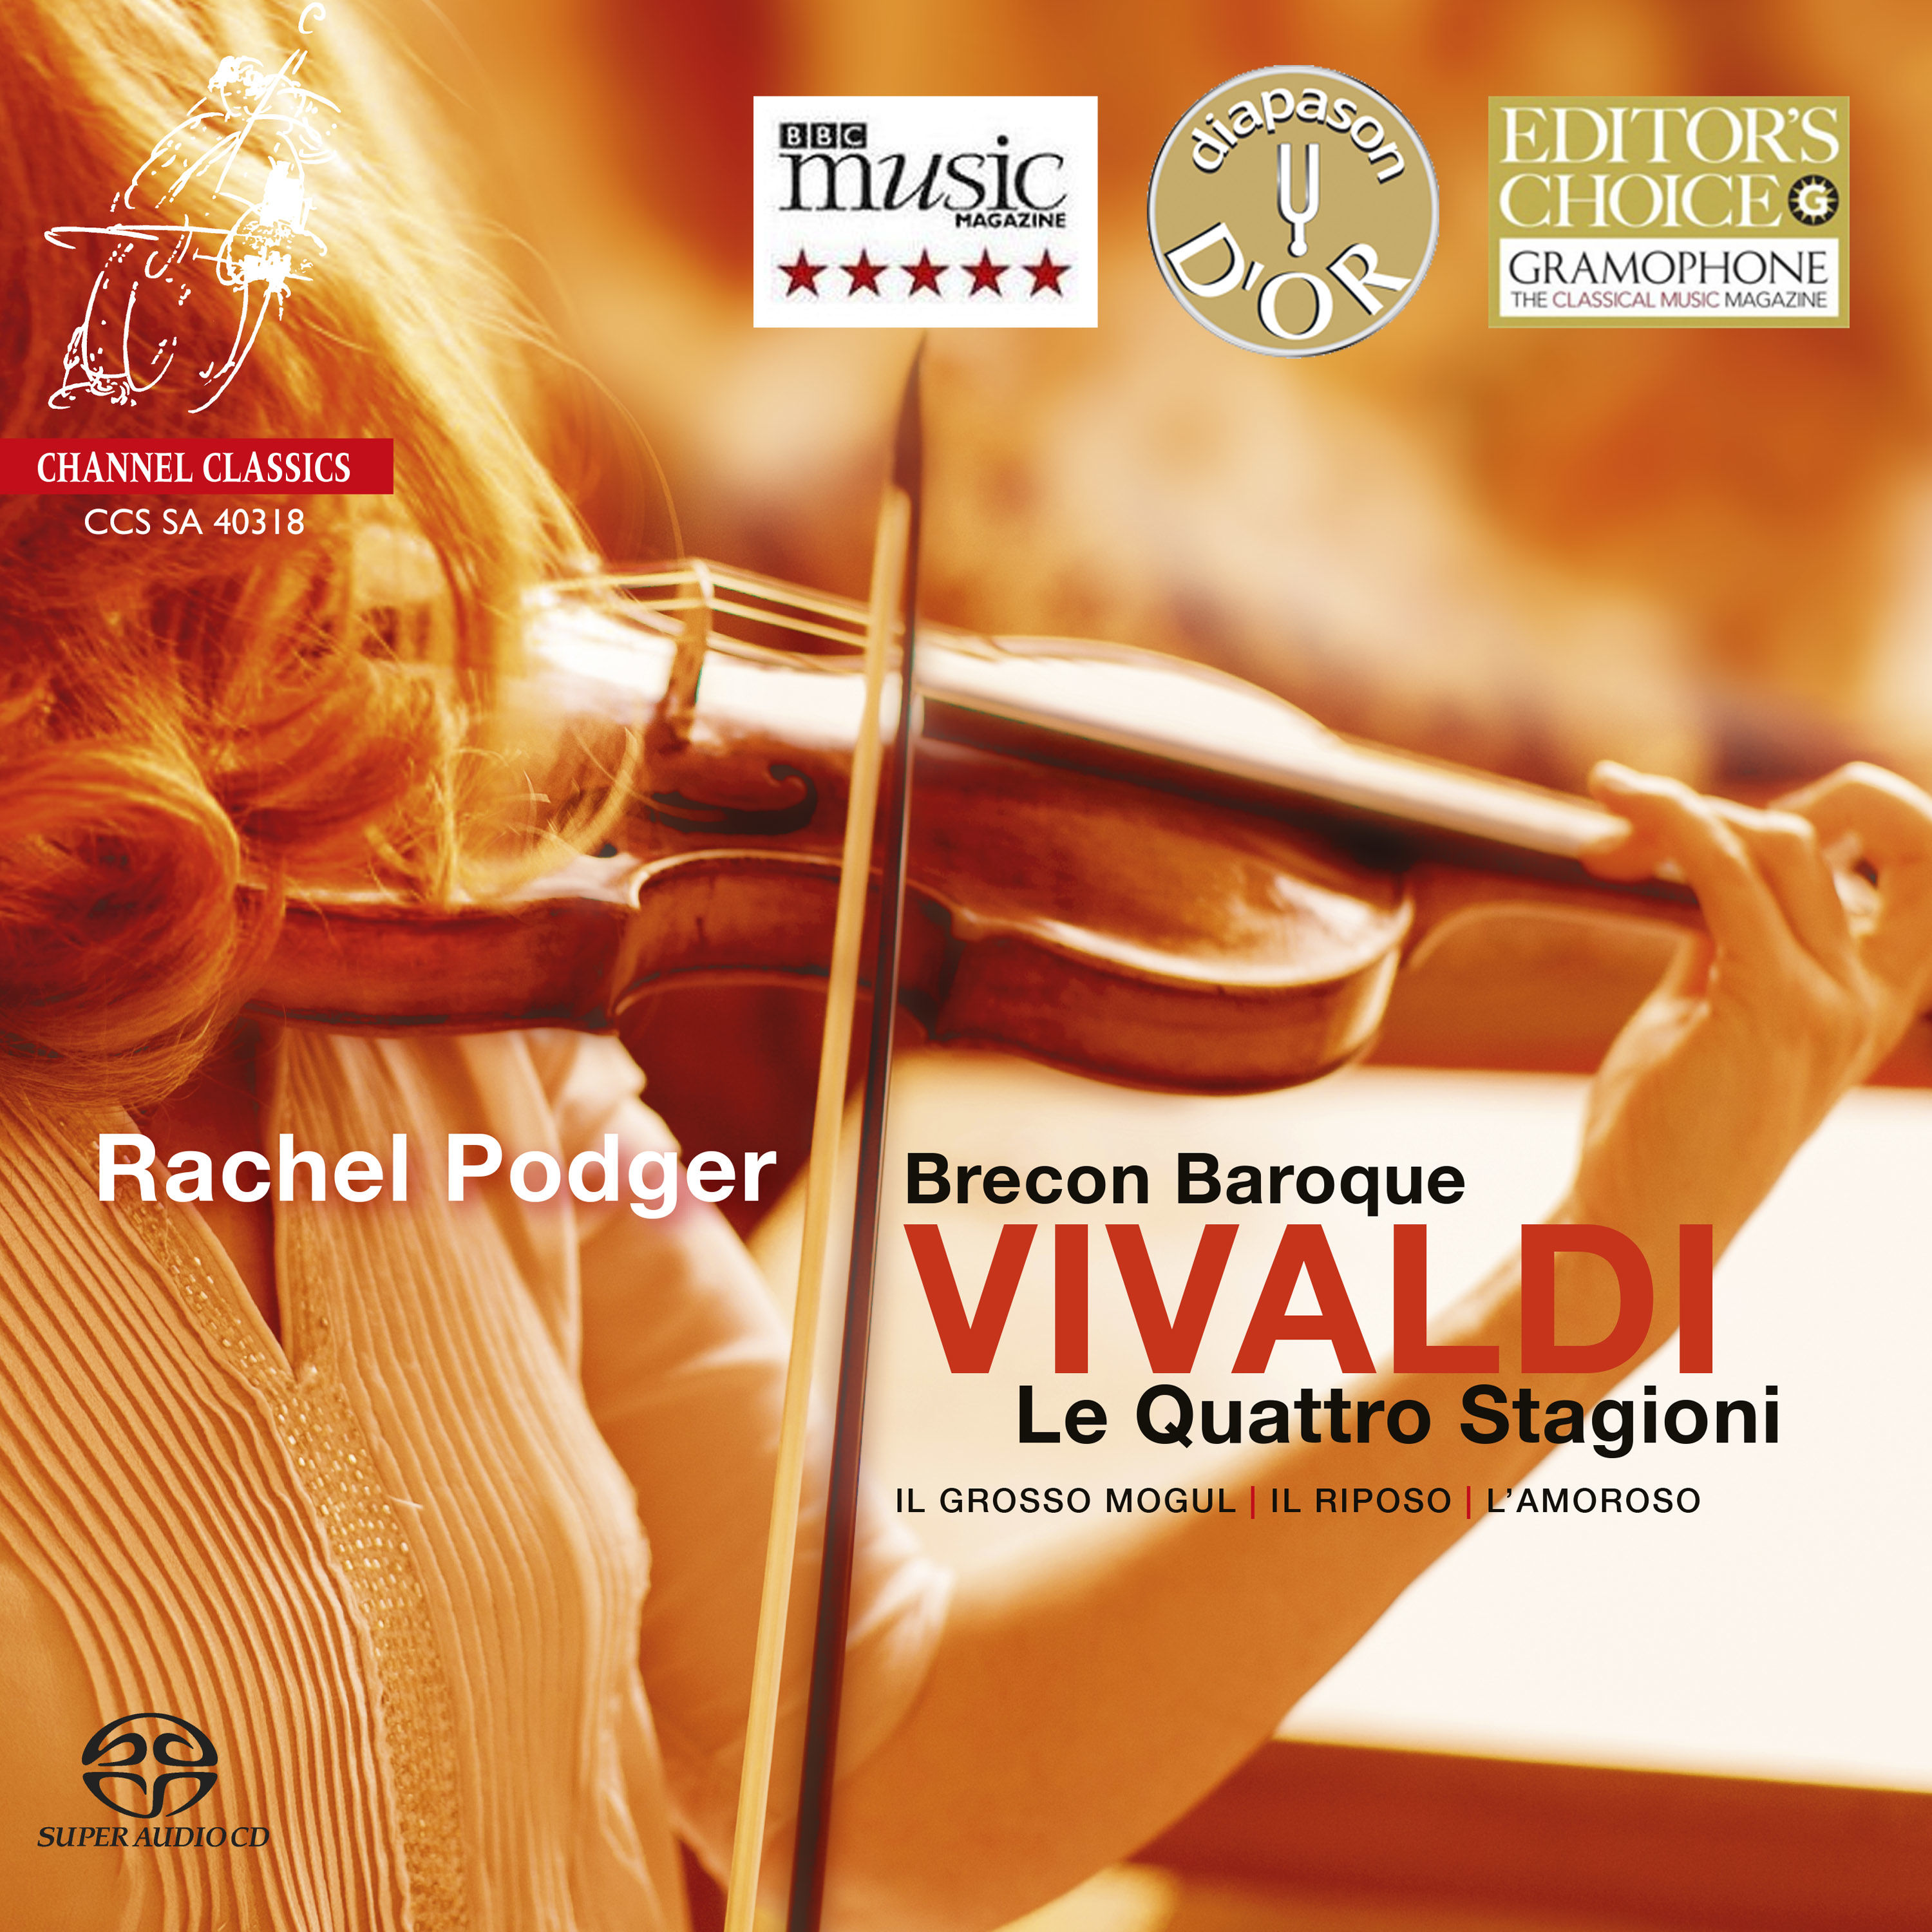 Rachel Podger – Vivaldi – Le Quattro Stagioni (The Four Seasons)